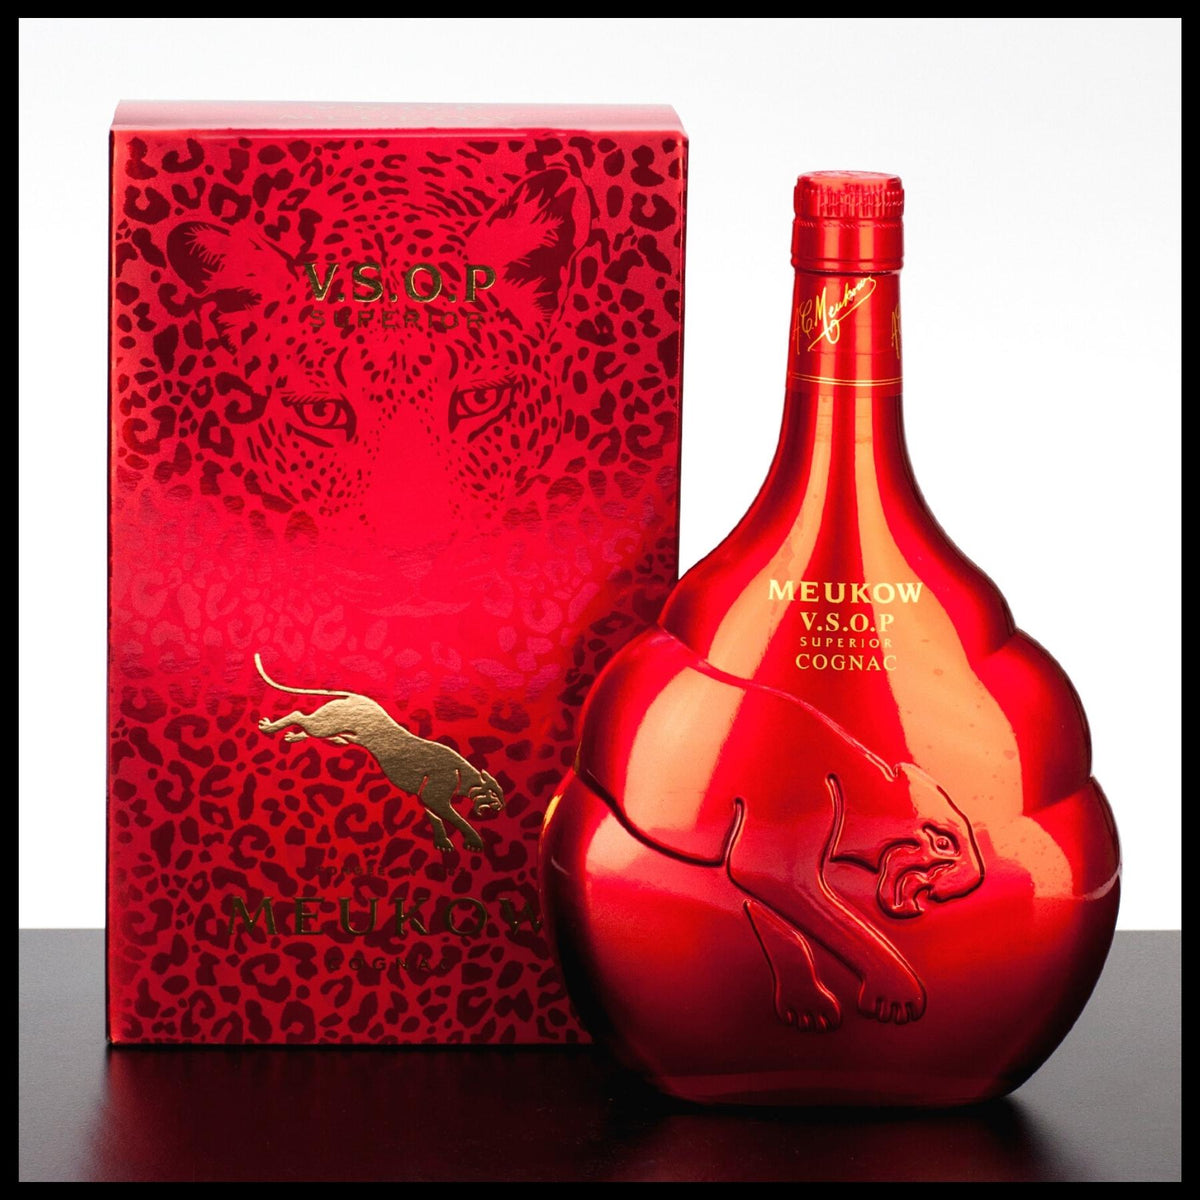 Meukow VSOP Superior Cognac Red 0,7L - 40% Vol. - Trinklusiv